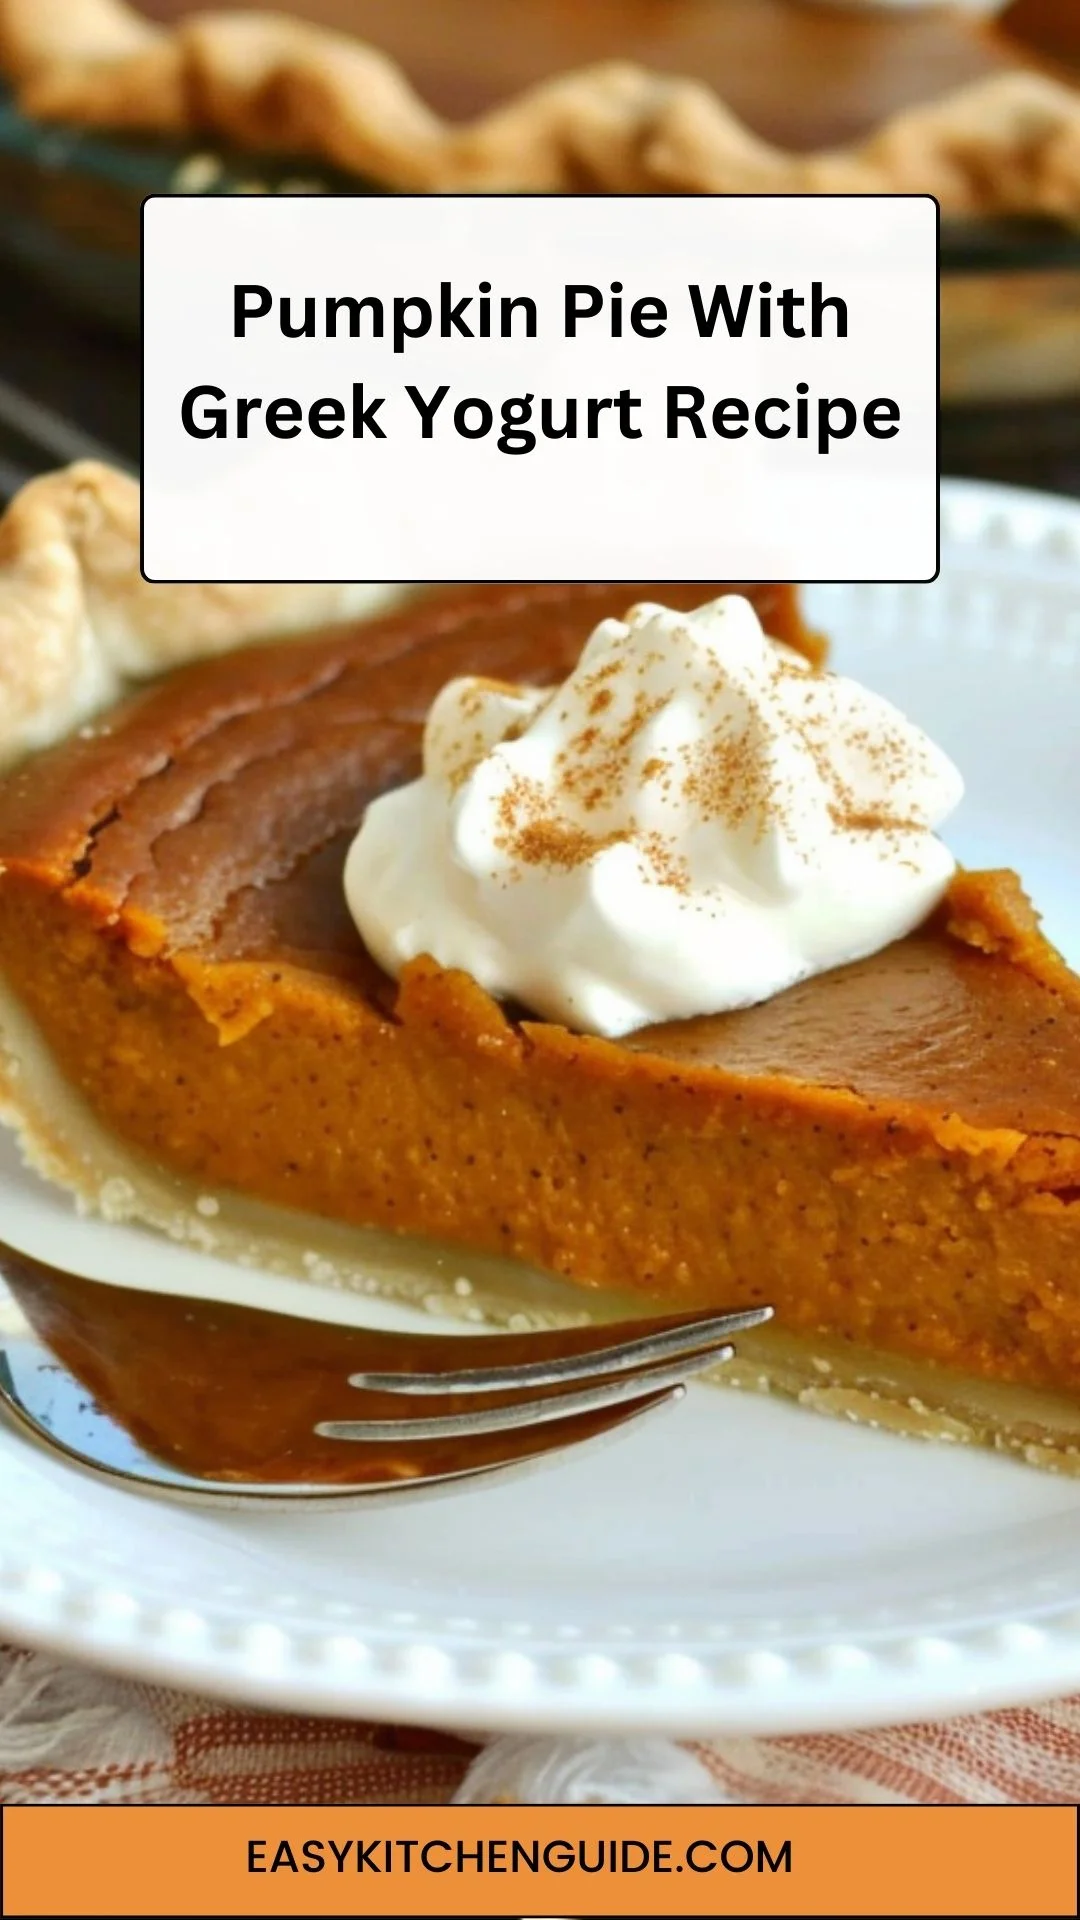 Pumpkin Pie With Greek Yogurt Recipe